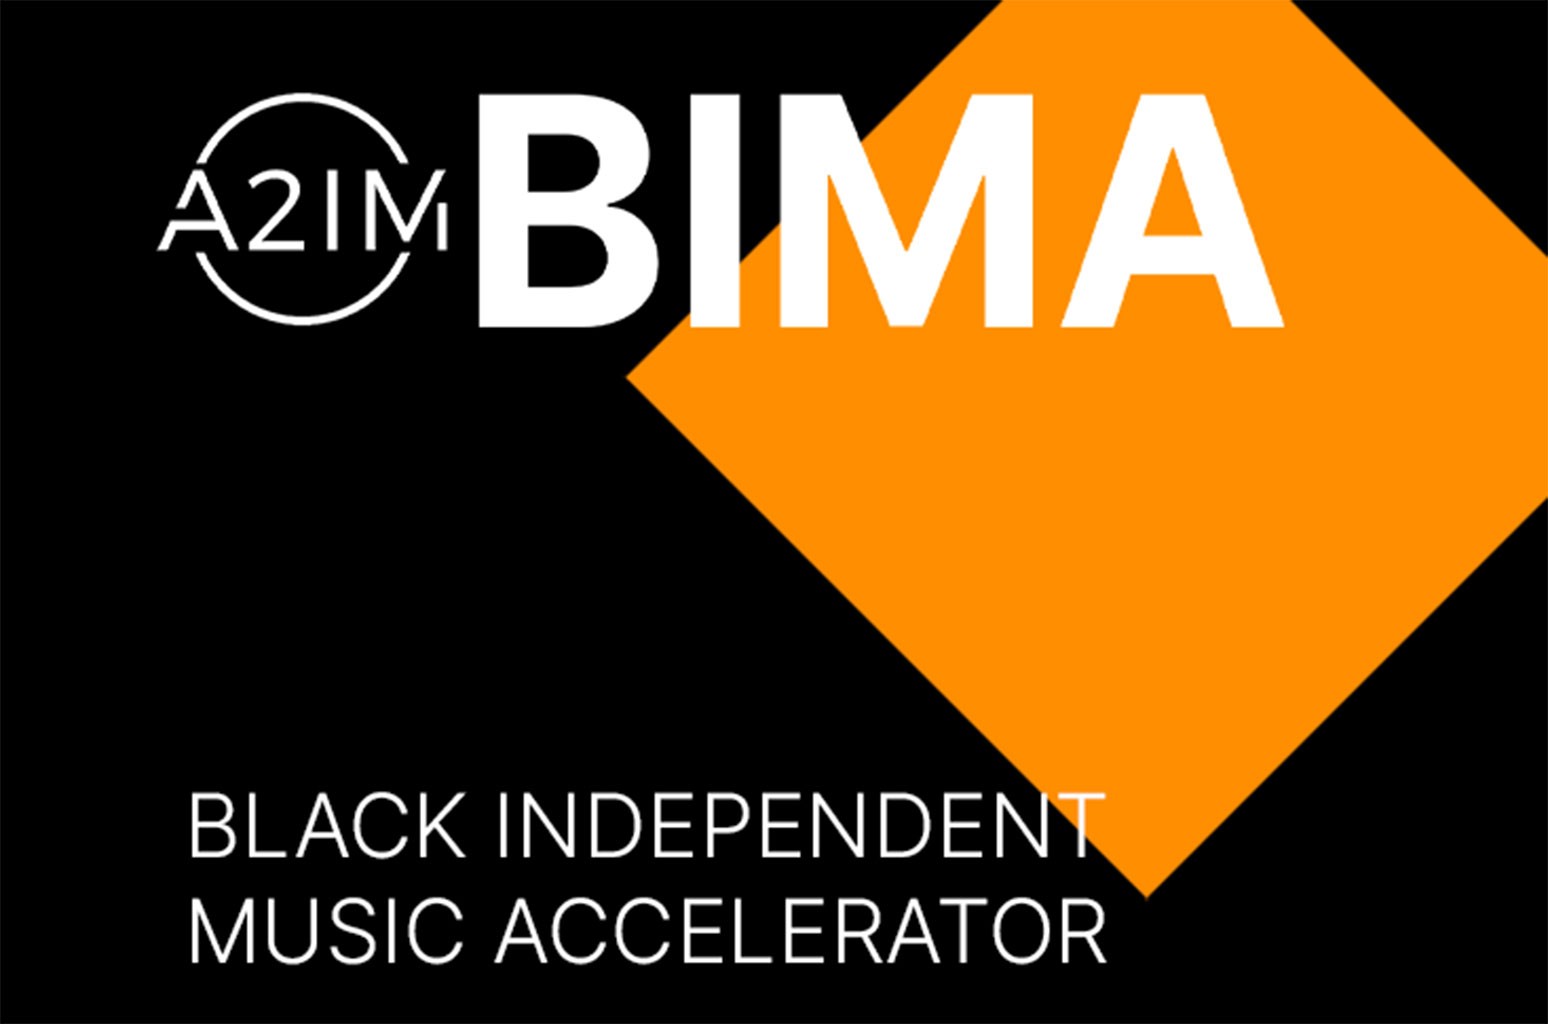 A2IM Black Independent Music Accelerator Logo